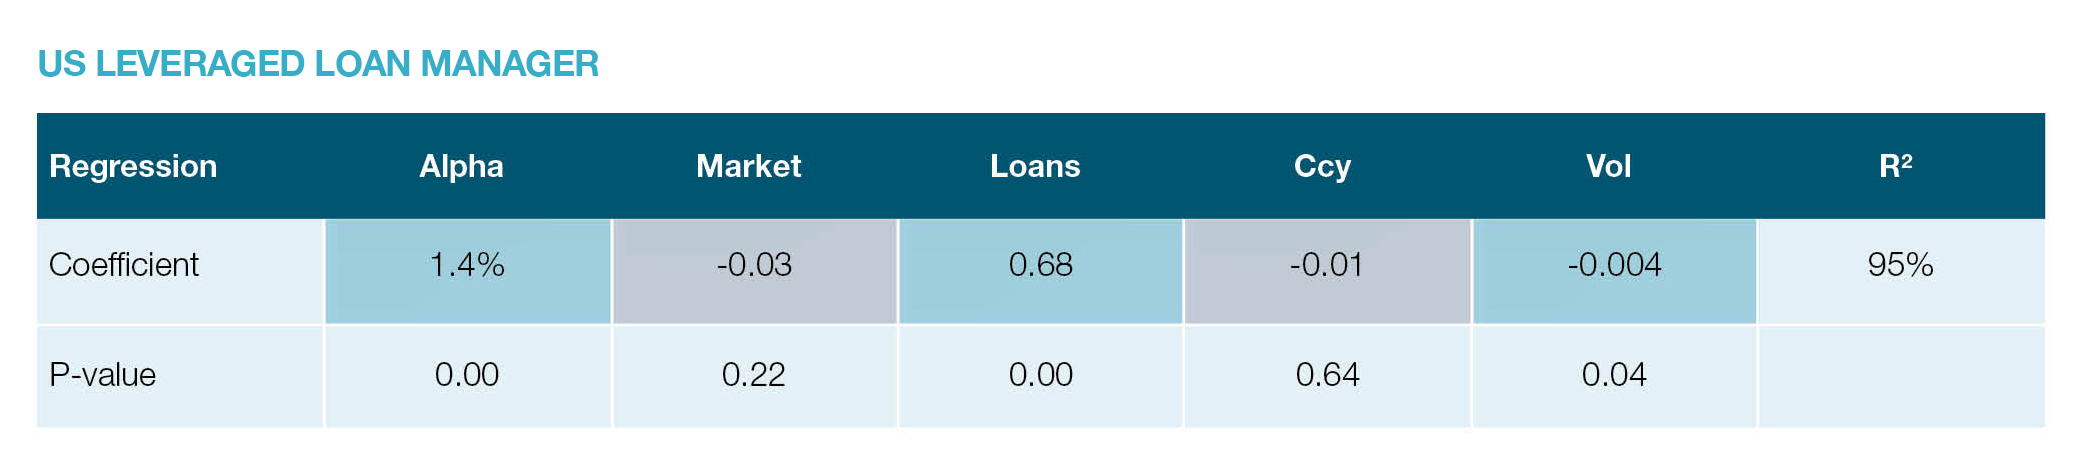 US Leveraged Loan